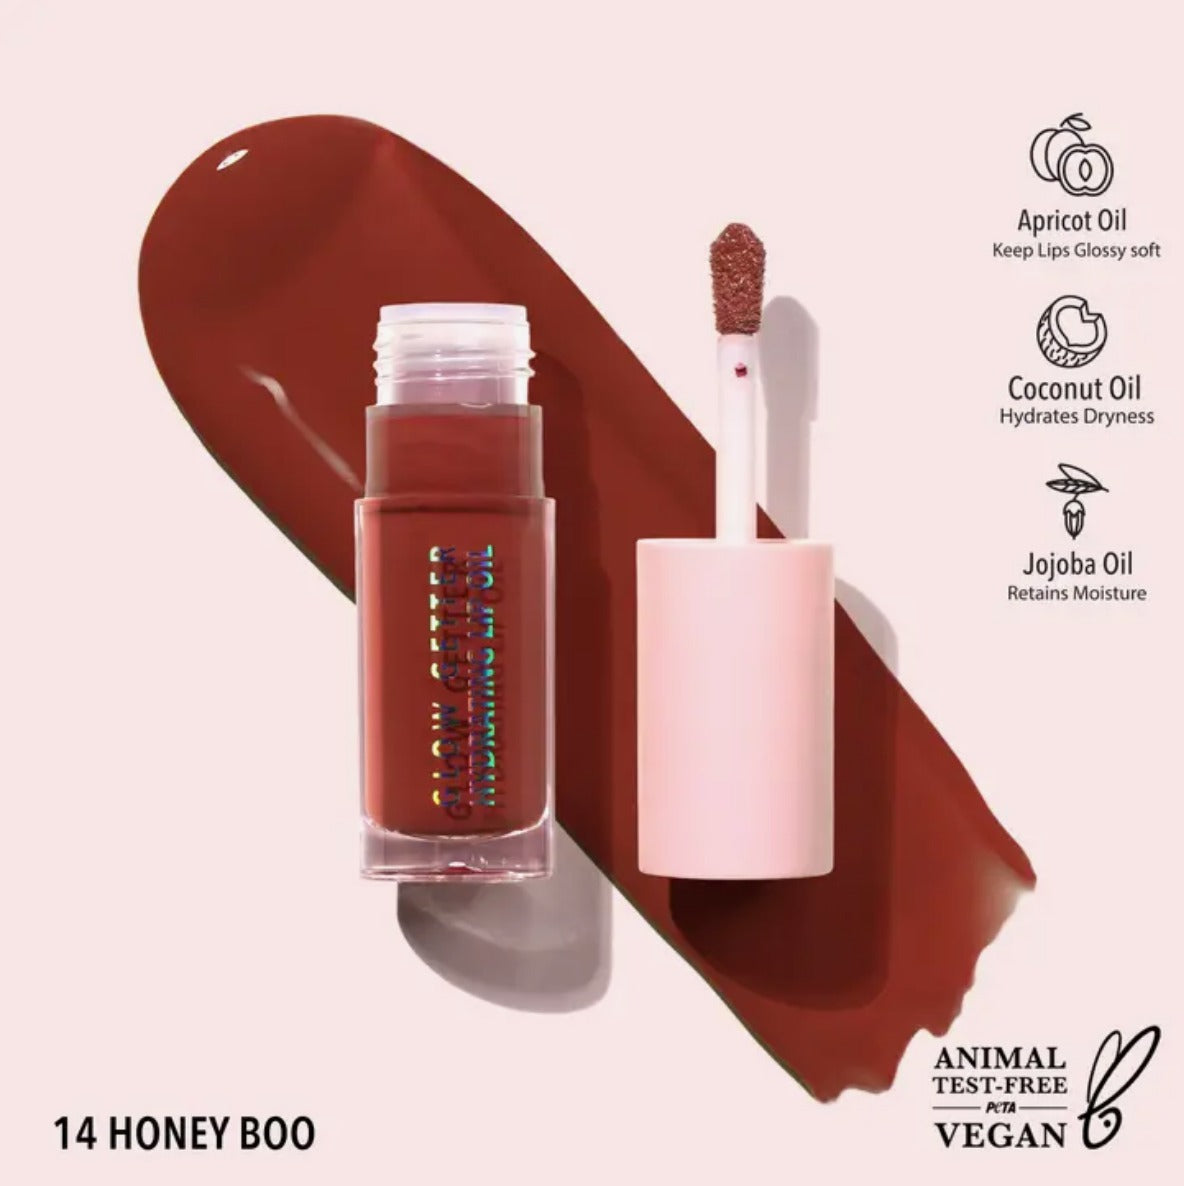 Moira Cosmetics, Glow Getter Hydrating Lip Oil, Vegan, 16 Colors